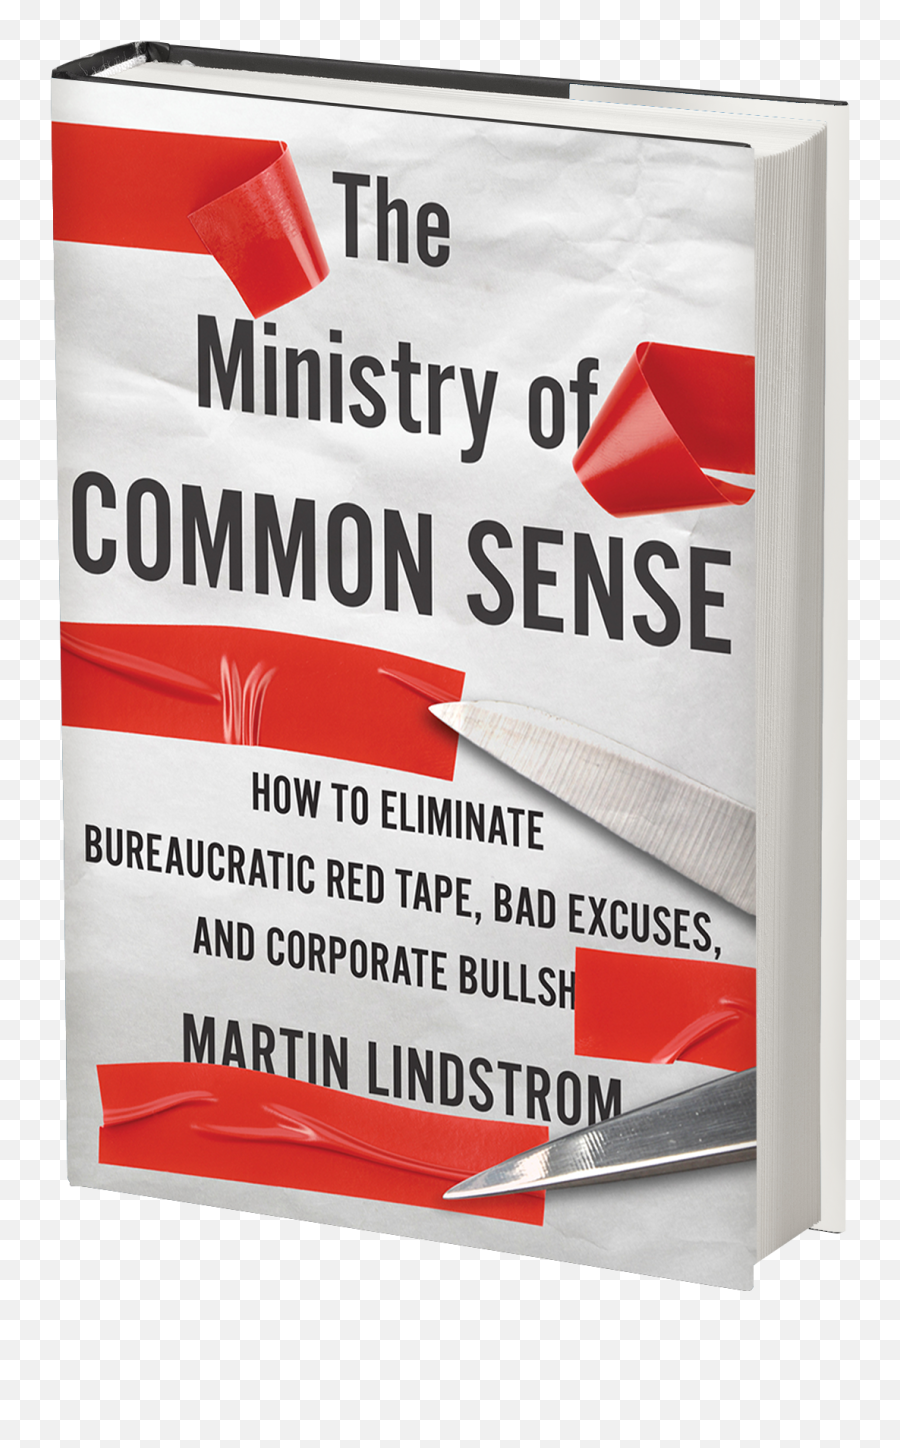 The Ministry Of Common Sense U2013 How To Eliminate Bureaucratic Emoji,Red Transparent Tape